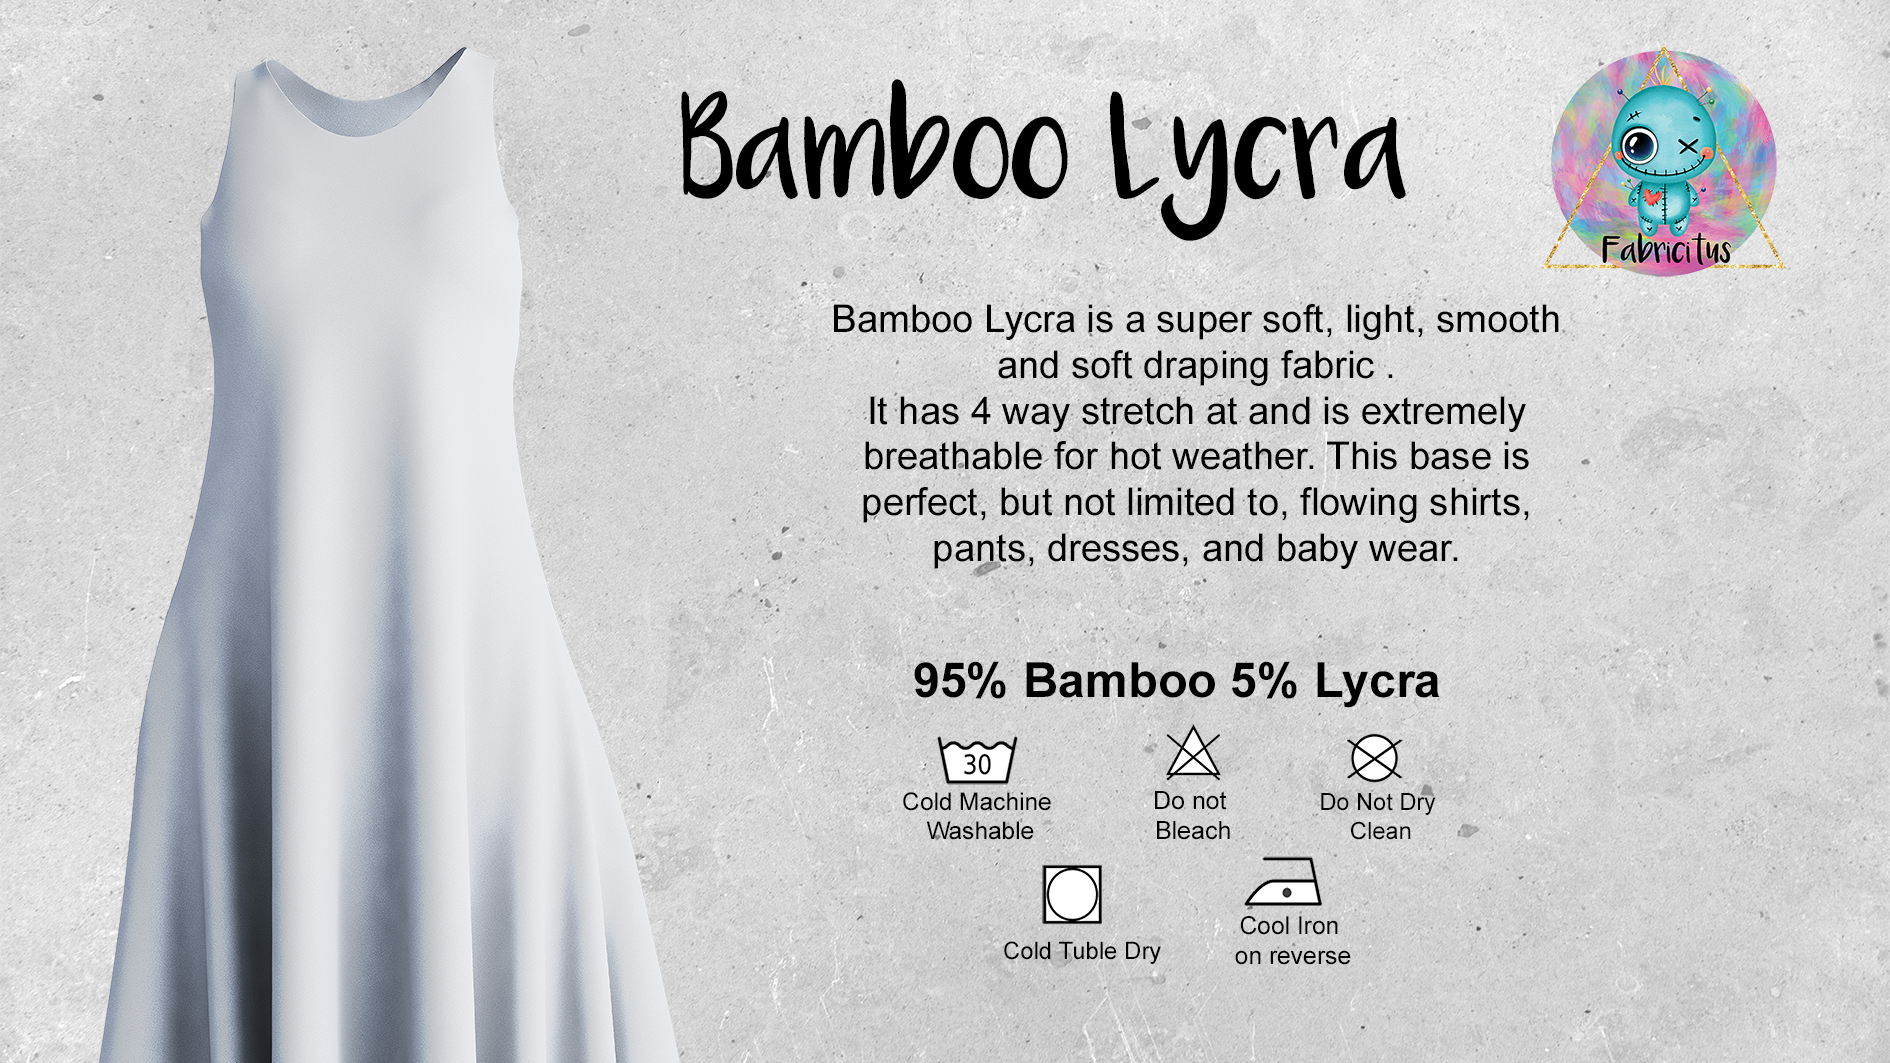 BAMBOO LYCRA